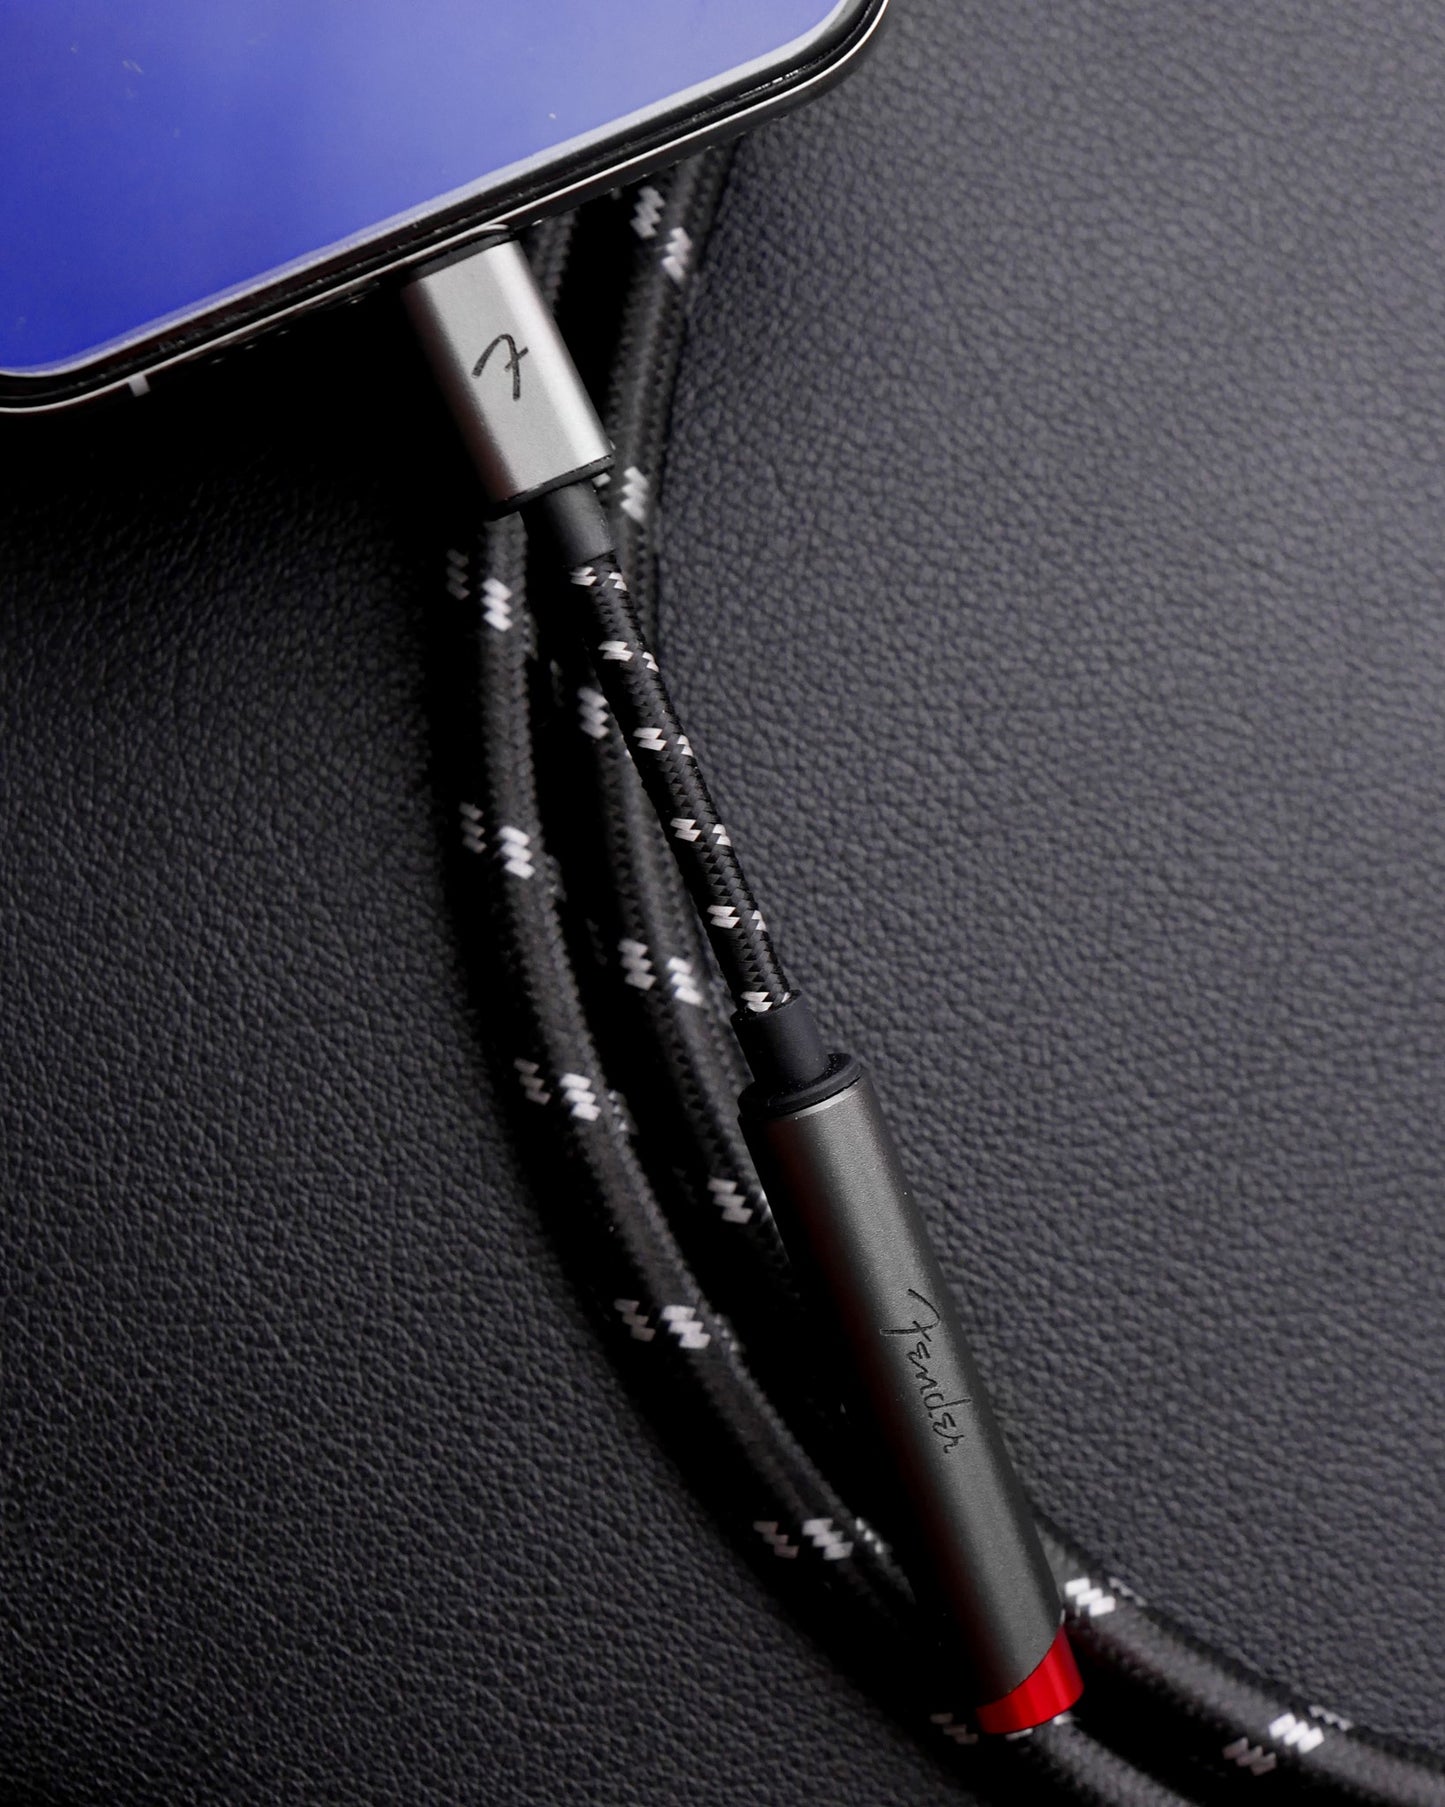 Fender AE1i Lightning DAC Amplifier for 3.5mm Earphone Apple iOS iPhone iPad